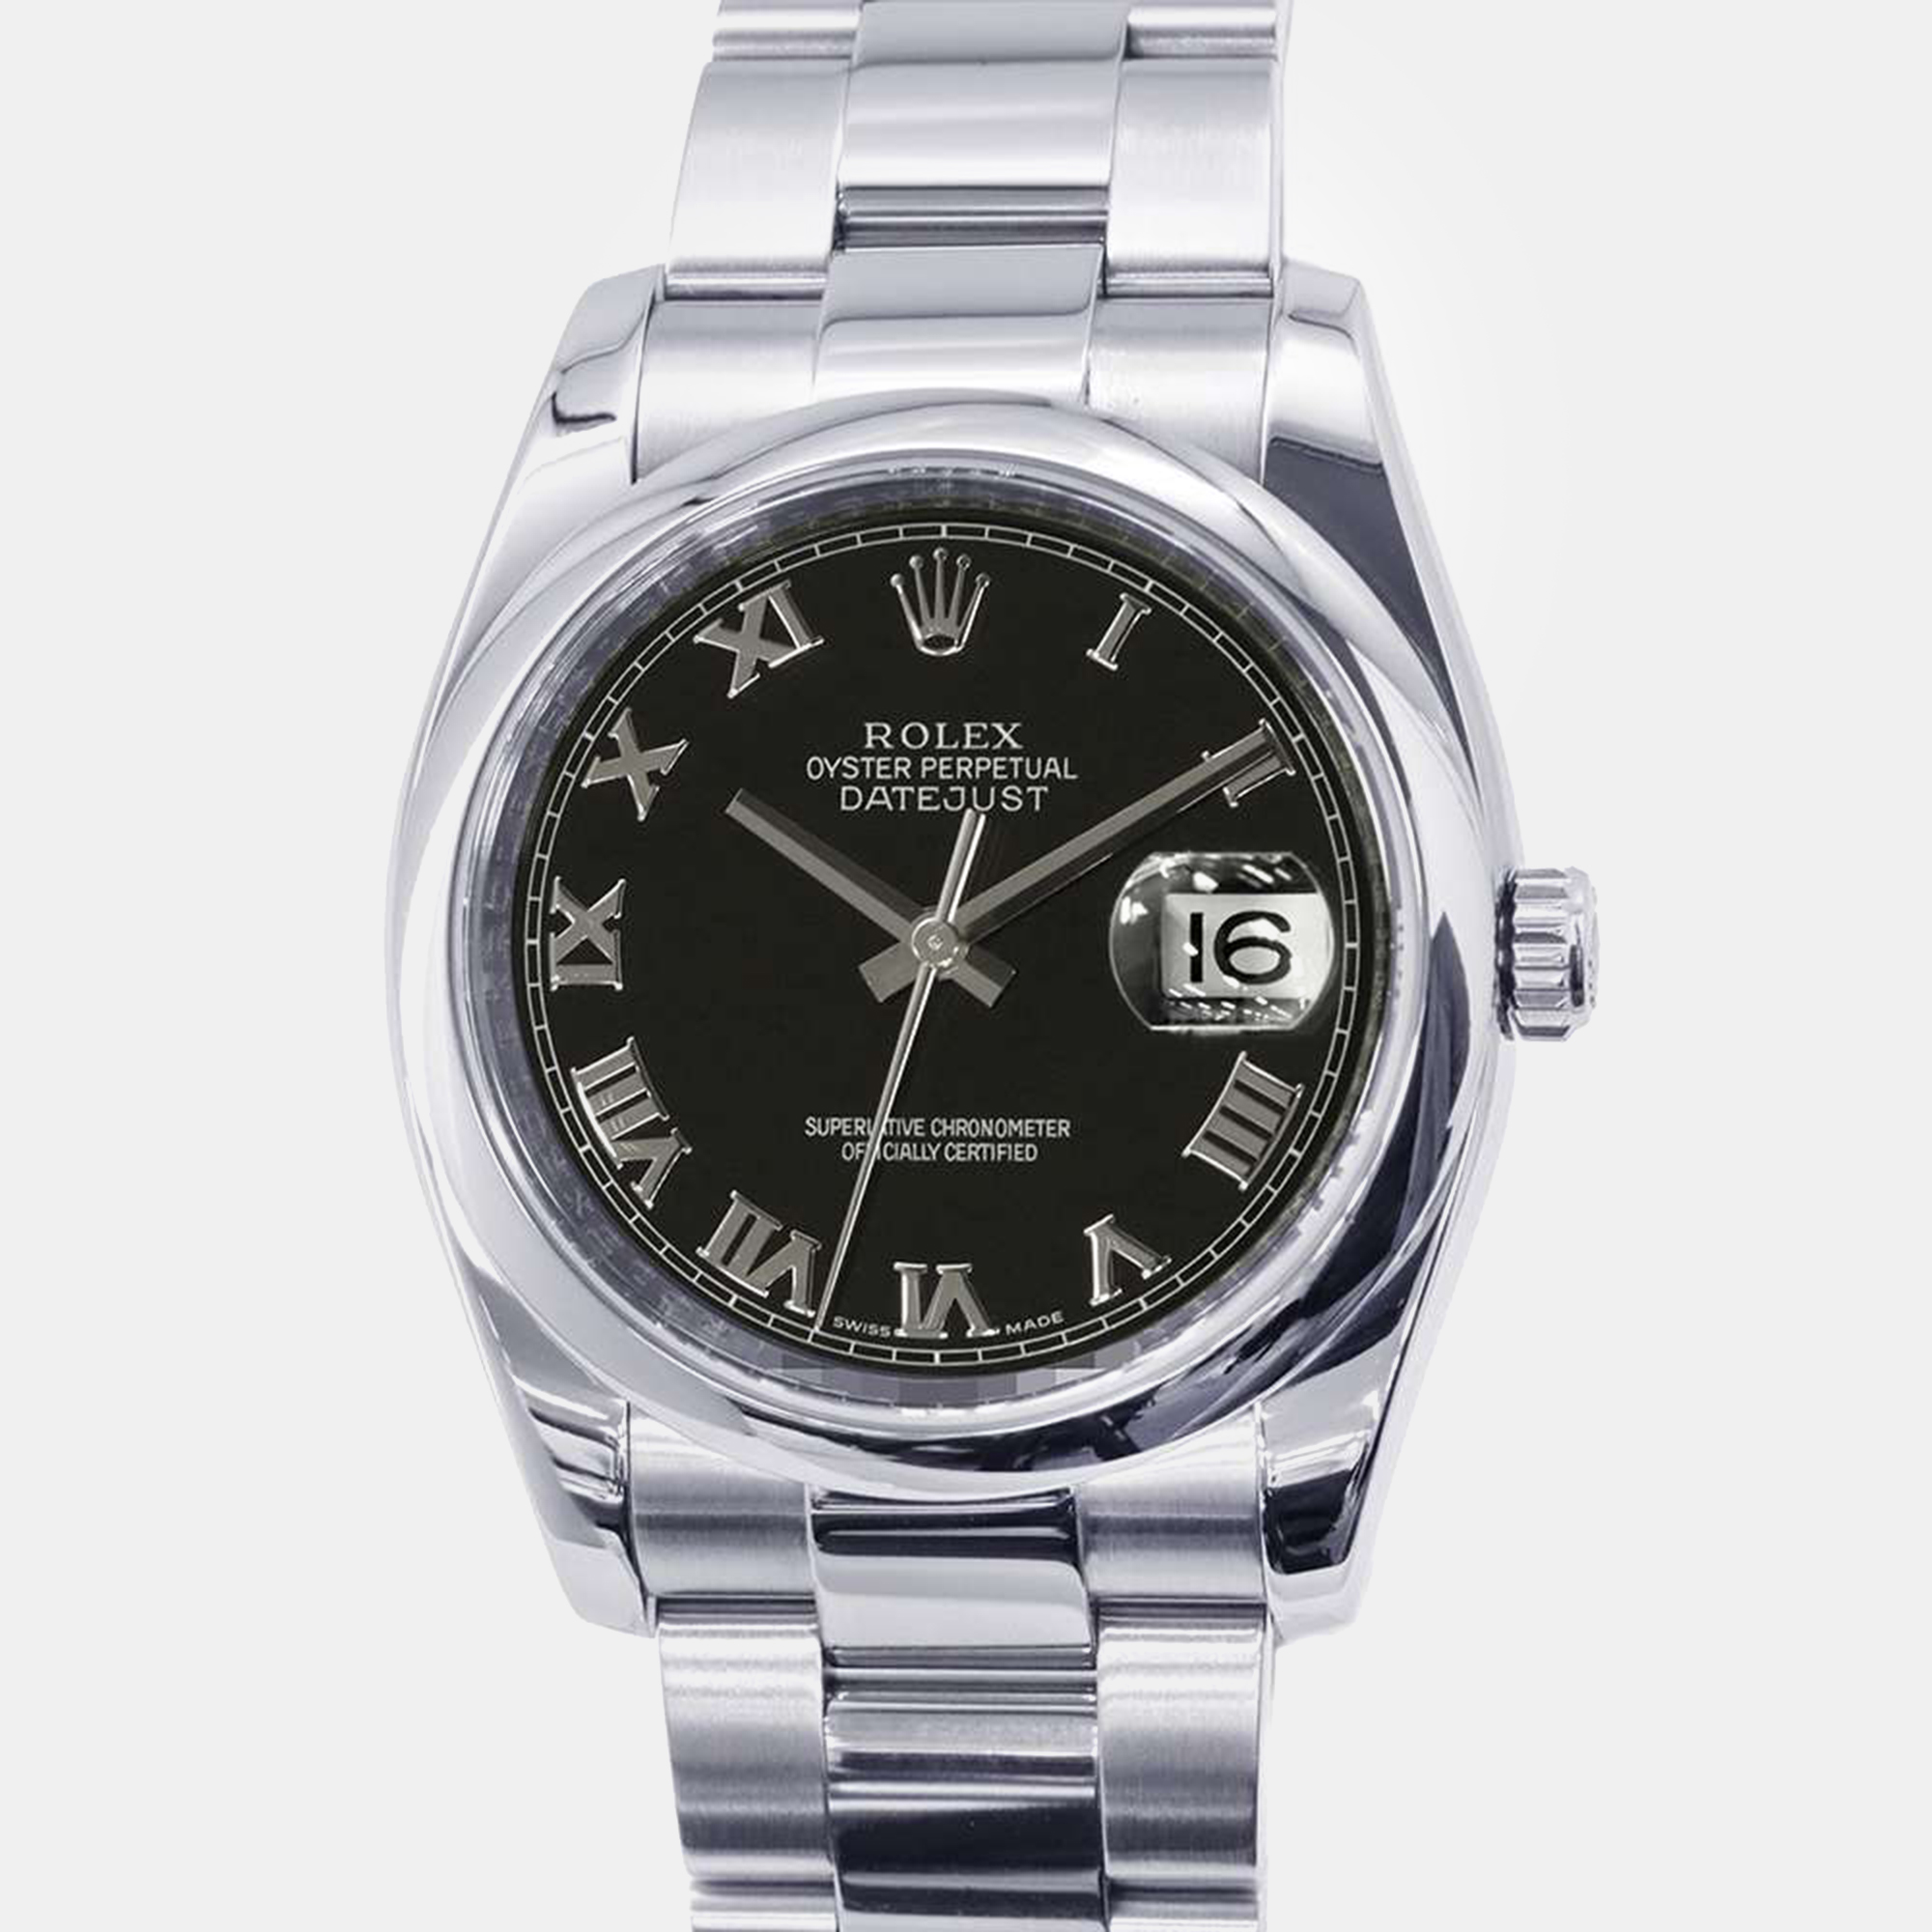 Rolex black stainless steel datejust 116200 automatic men's wristwatch 36 mm